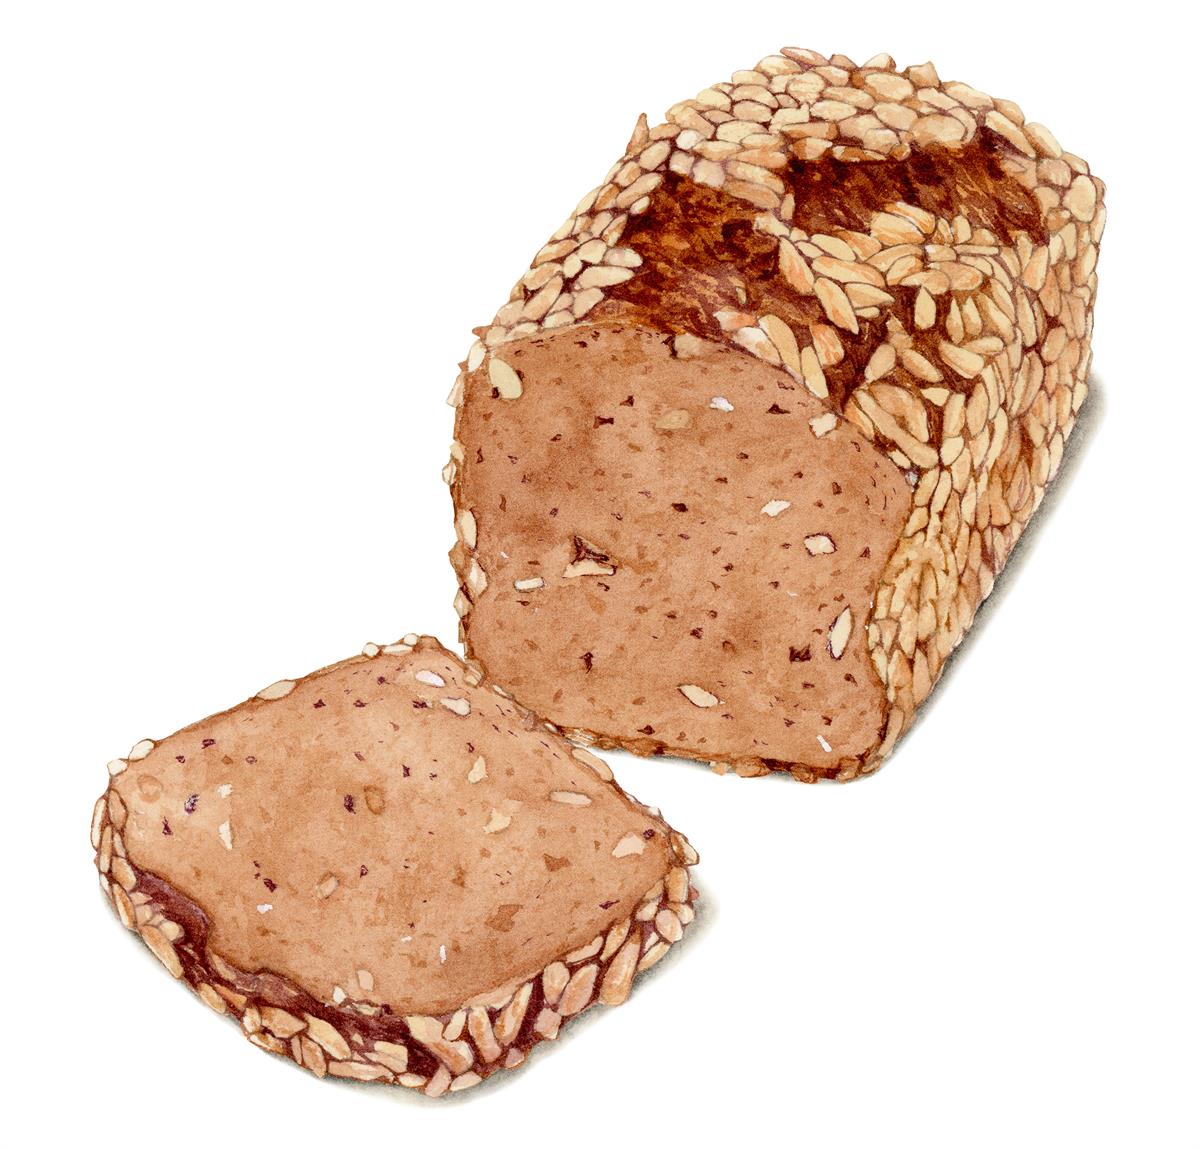 Joseph Brot, glutenfreies Bio Saaten Brot: 7,20 Euro